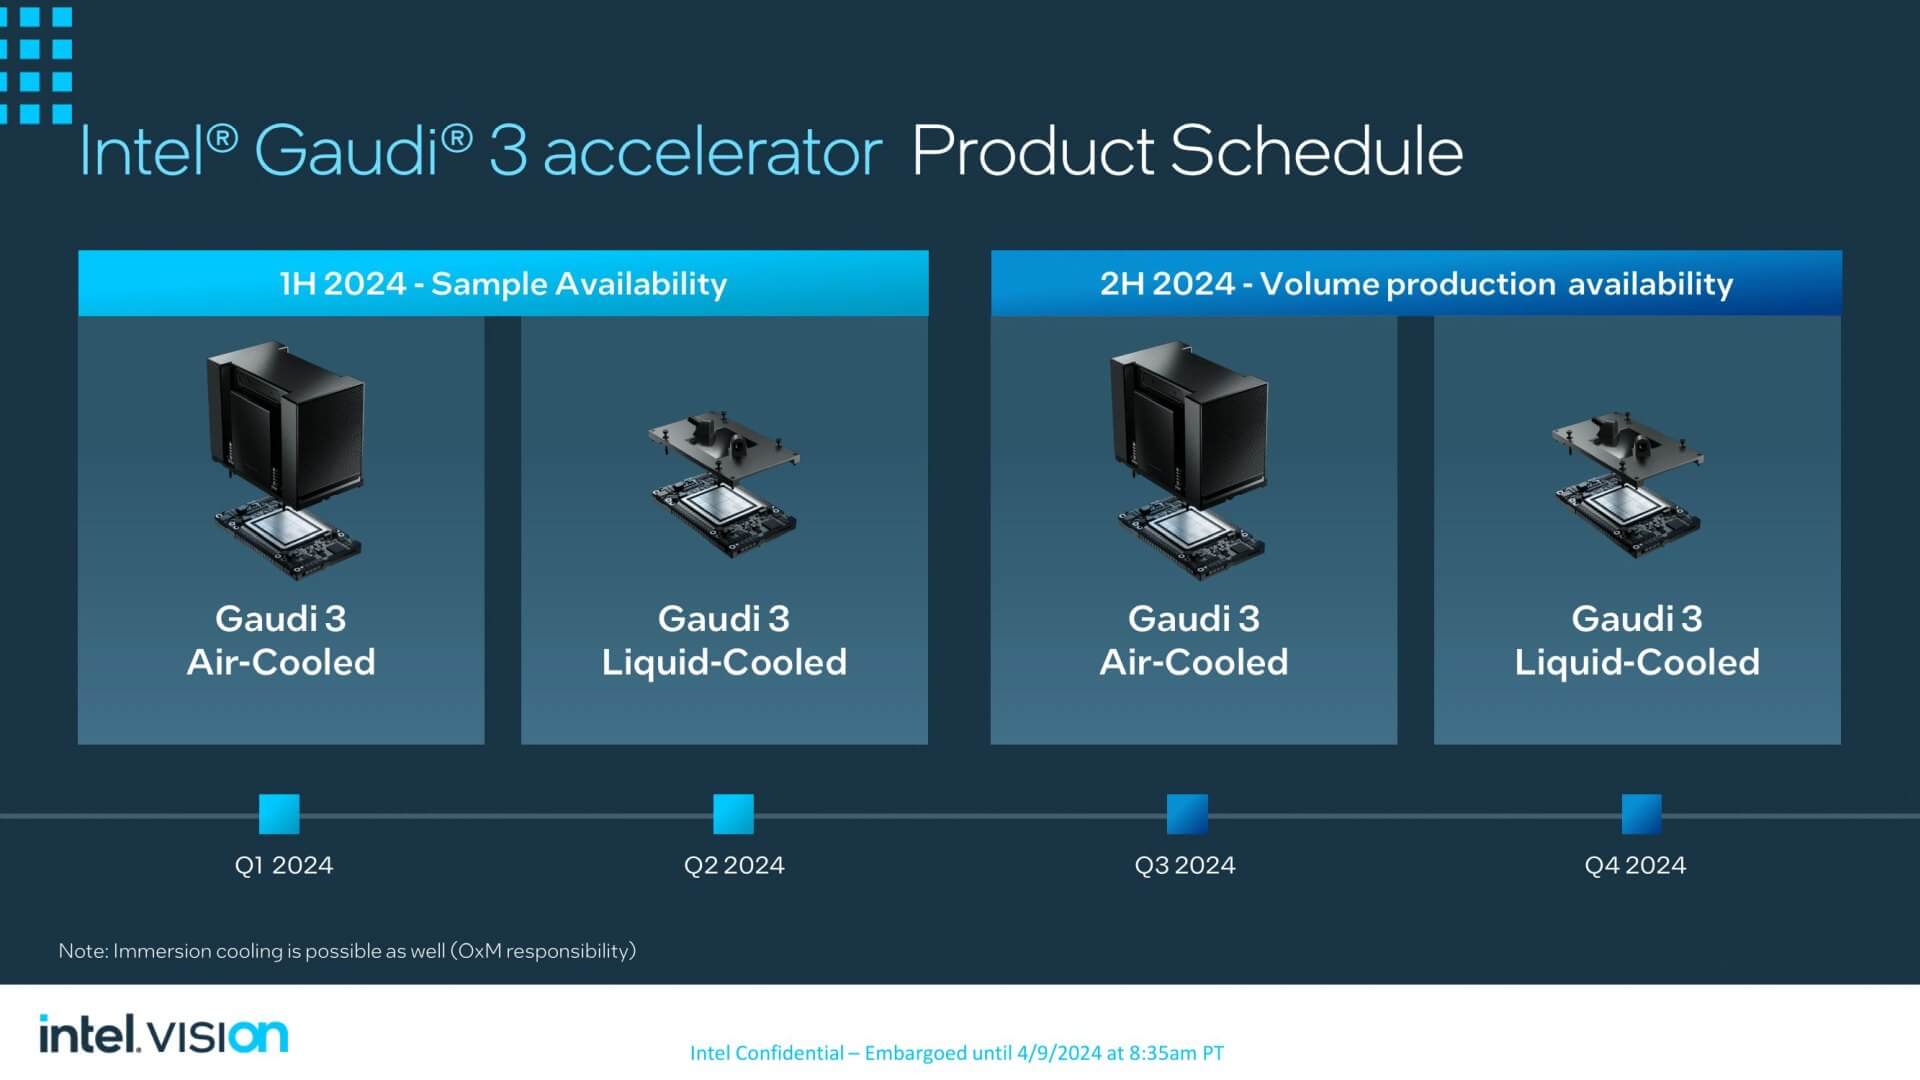 Intel Gaudi 3 accelerator